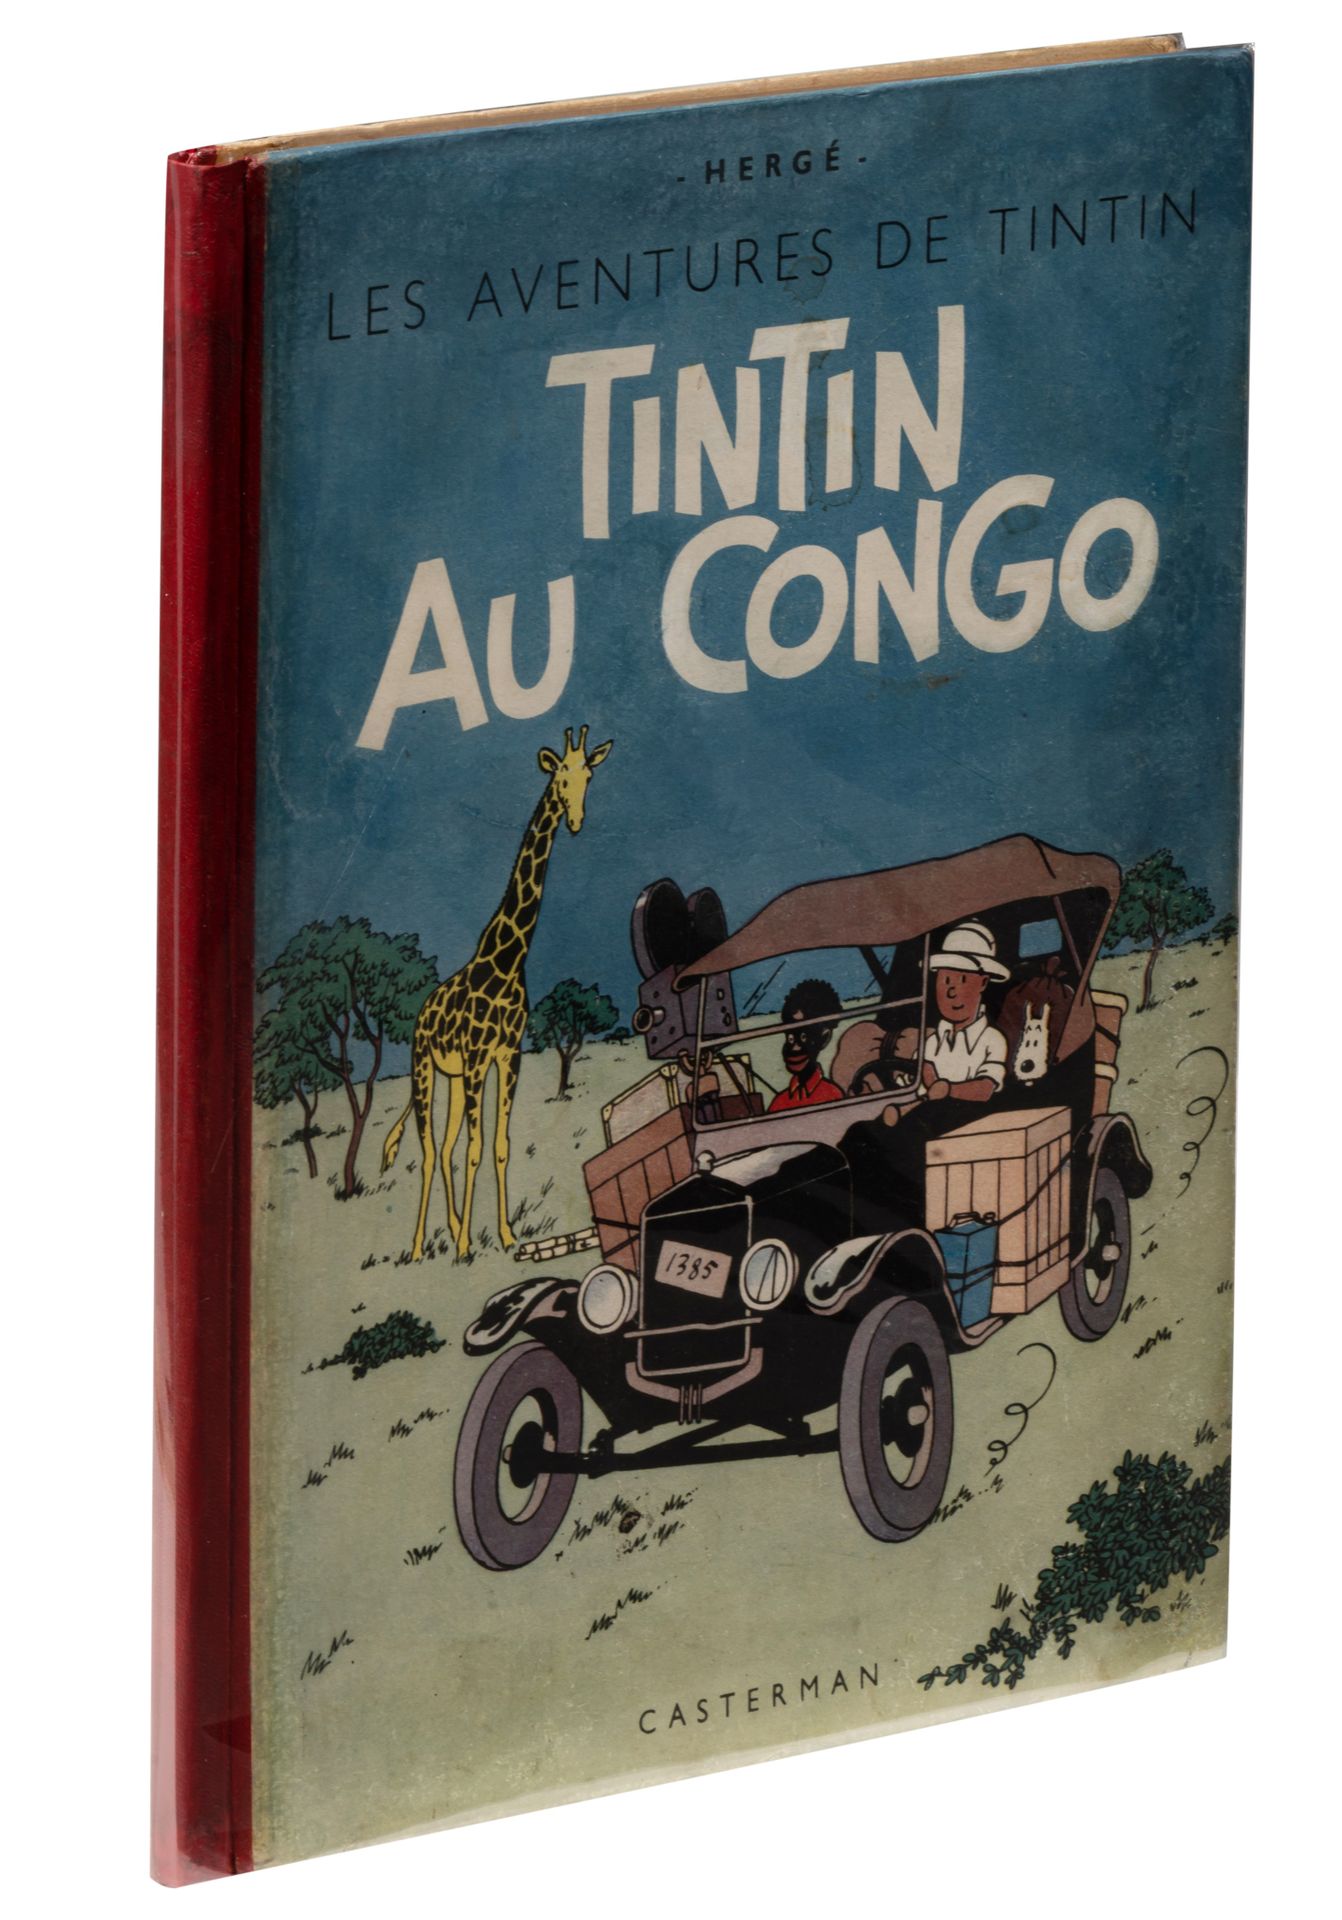 Hergé (1907-1983), 'Tintin au Congo', 1942 Hergé (1907-1983), "Tim und Struppi i&hellip;